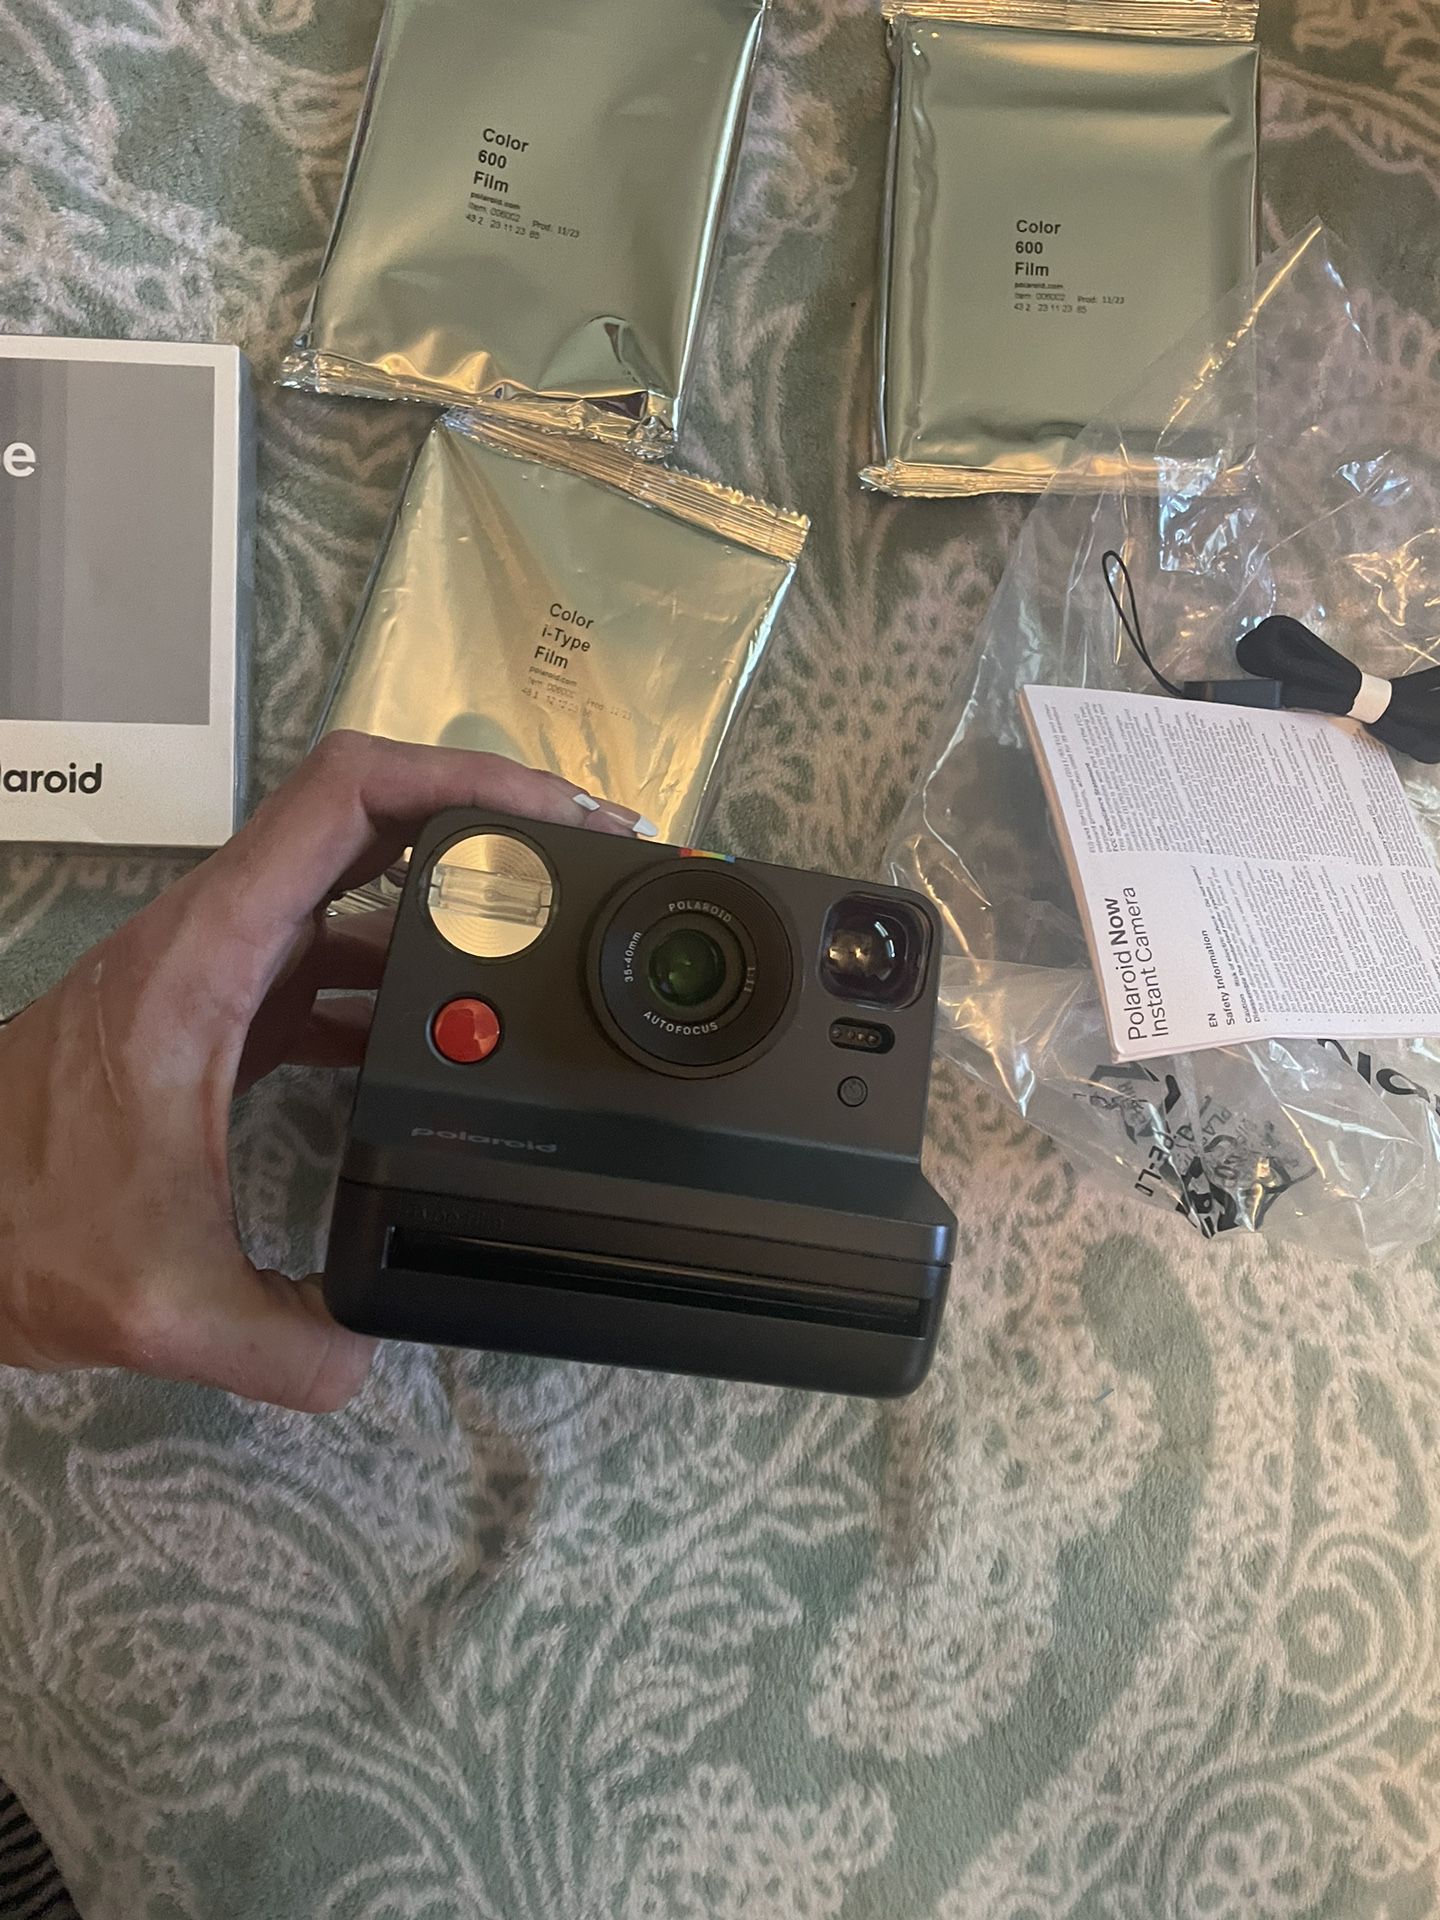 New Polaroid Camera 4 Packs Of Film